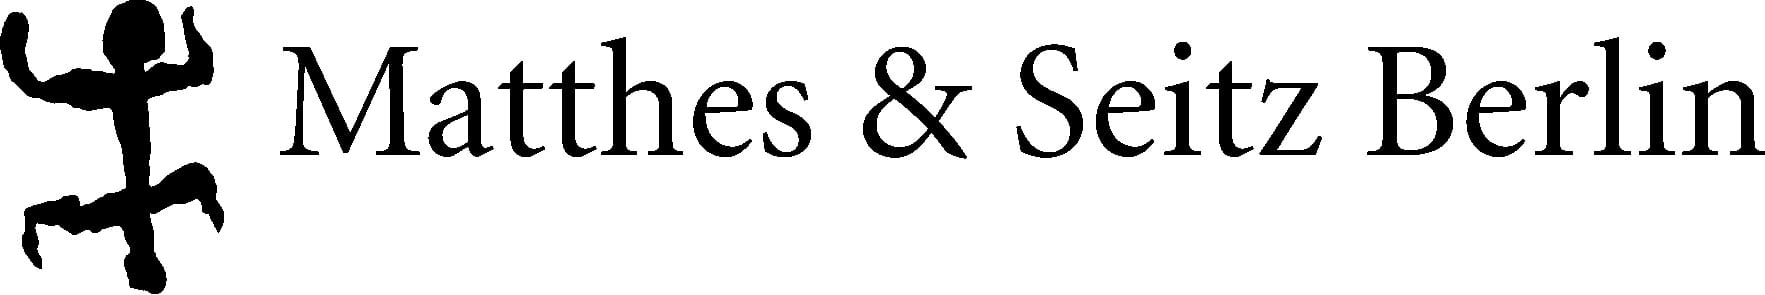 Logo Matthes & Seitz Berlin